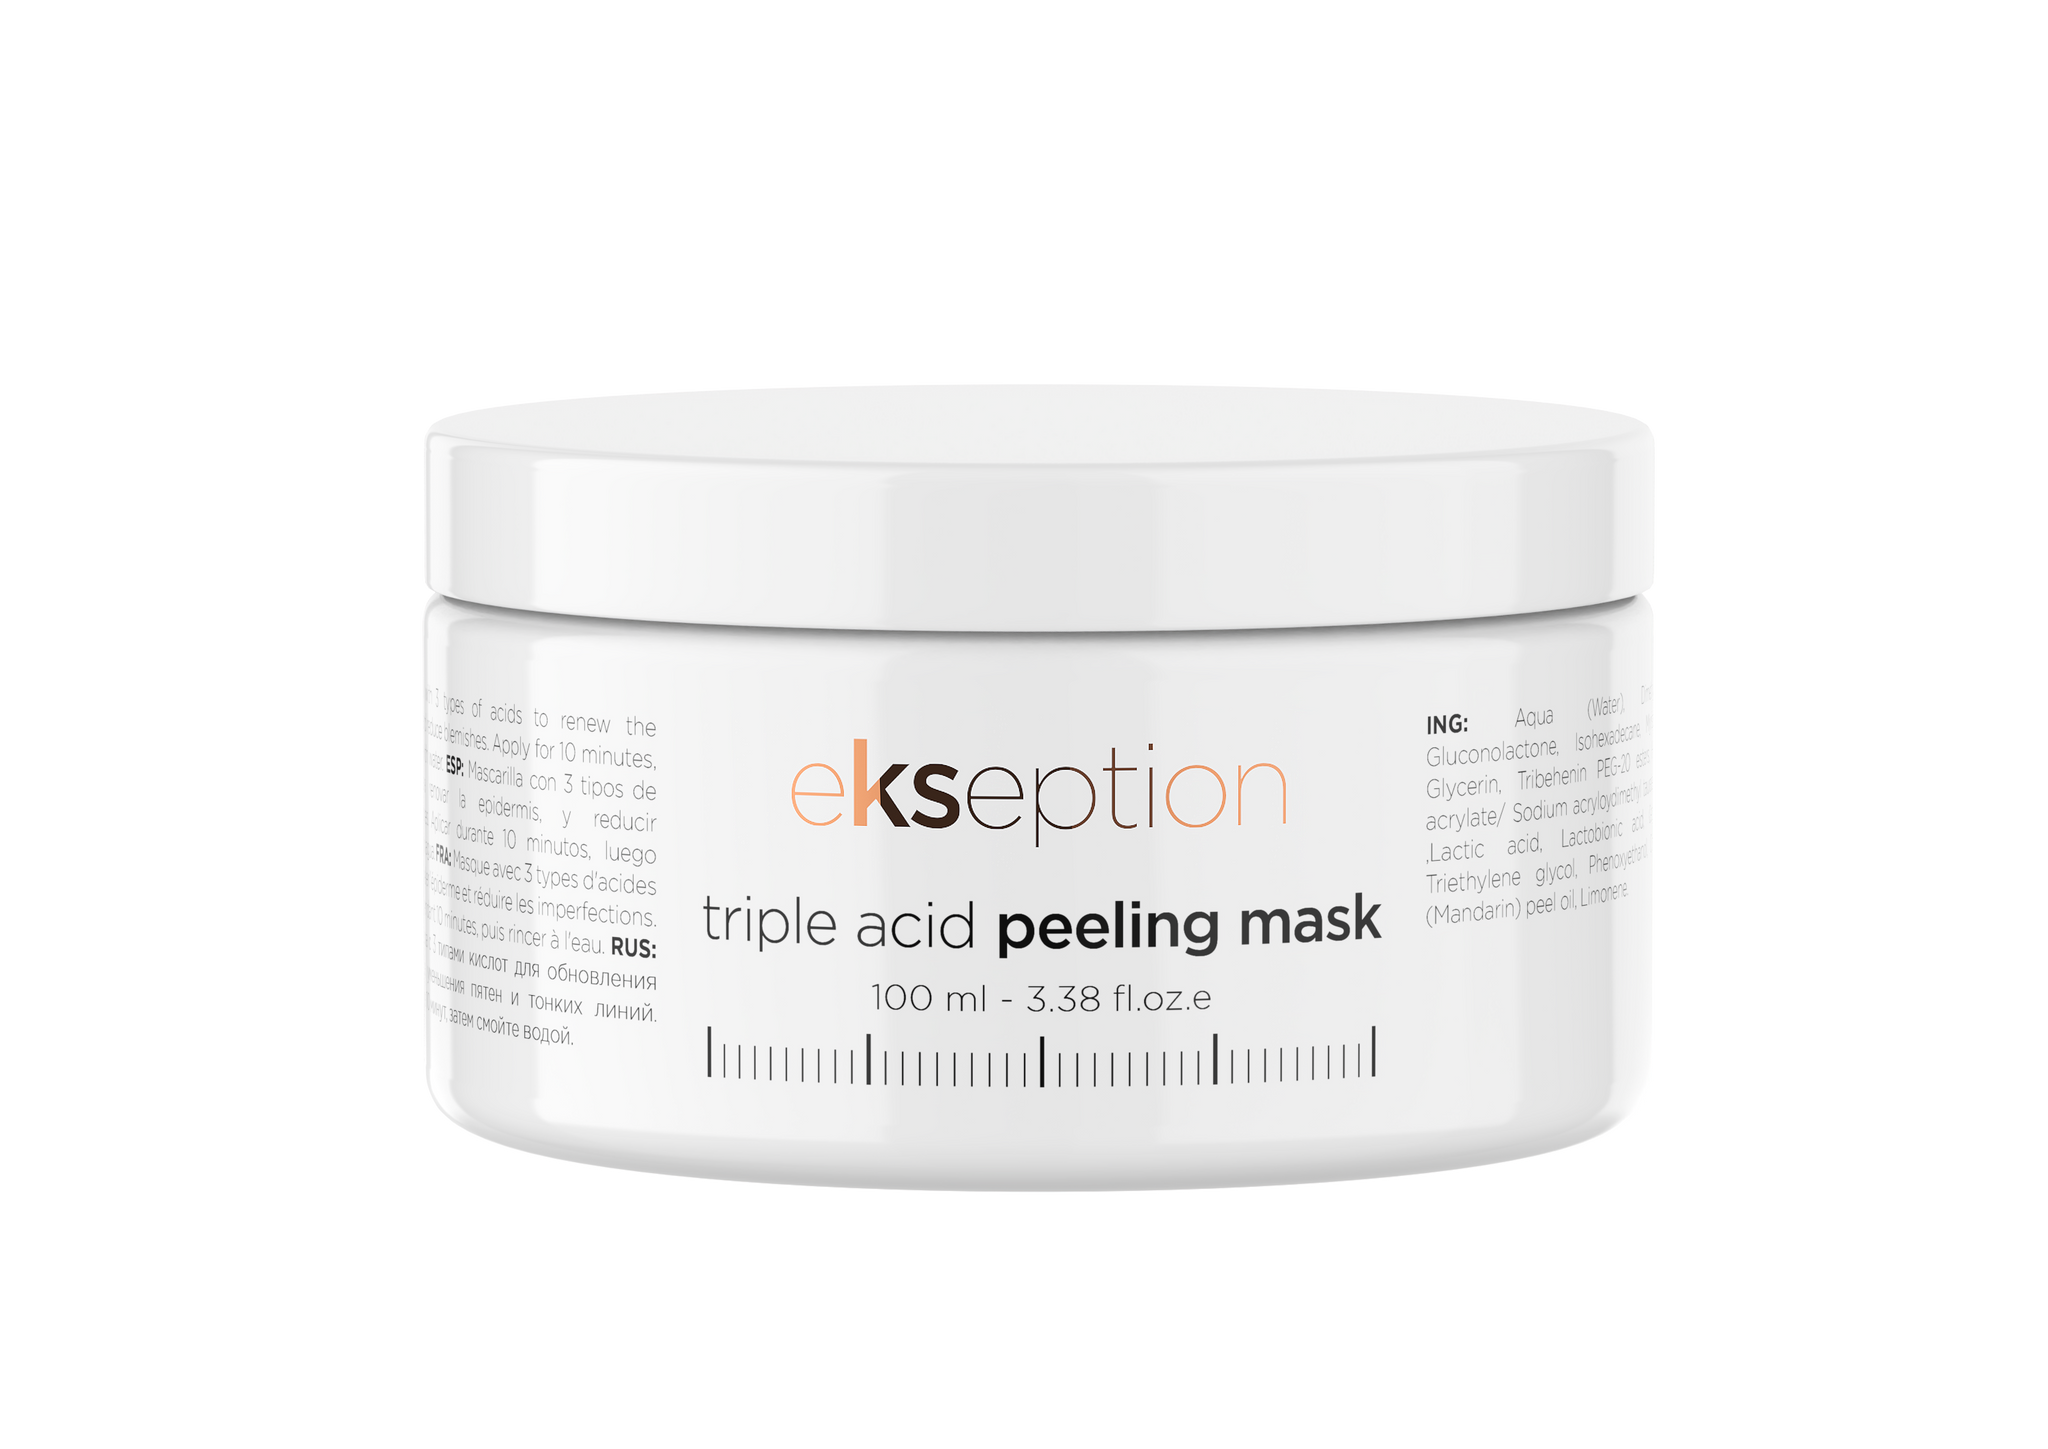 Ekseption Triple Acid & Peeling Mask (Professional use only)